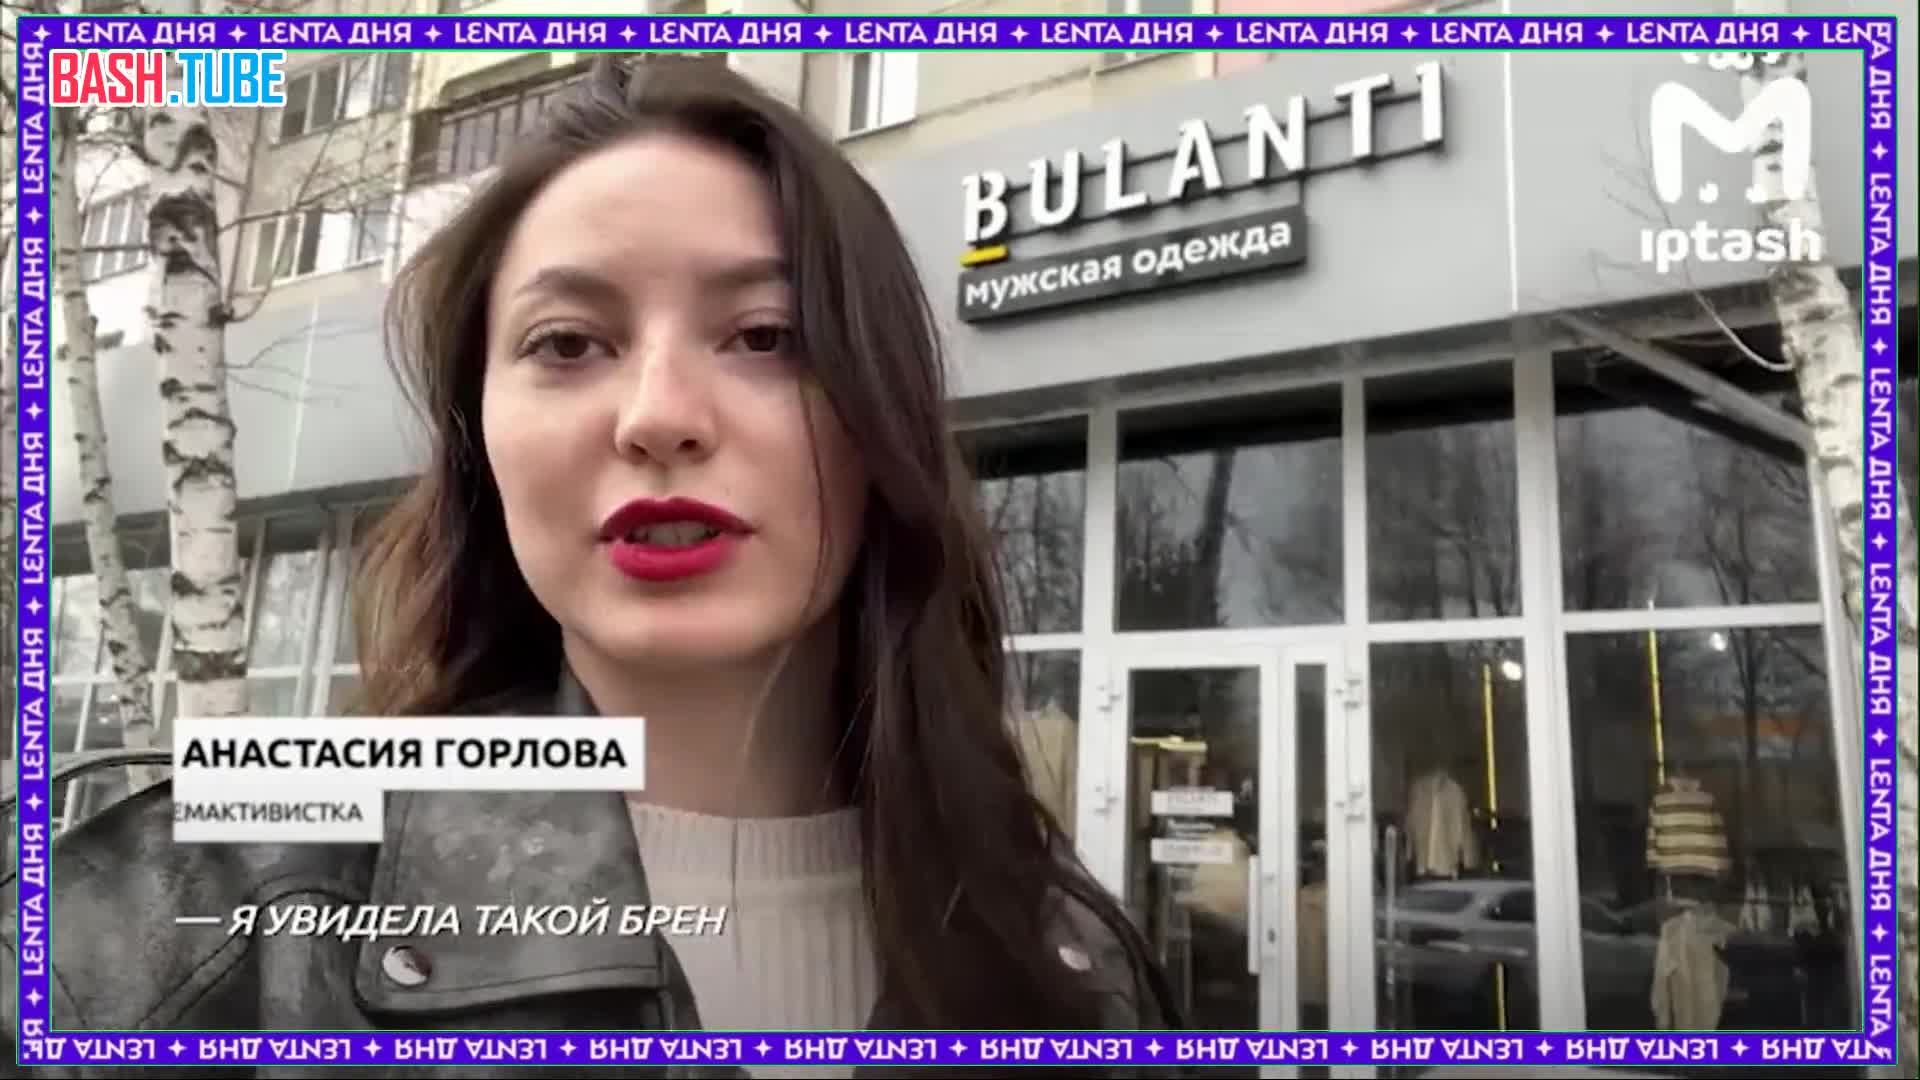  Россиянку оскорбила буква «B» в логотипе мужского магазина